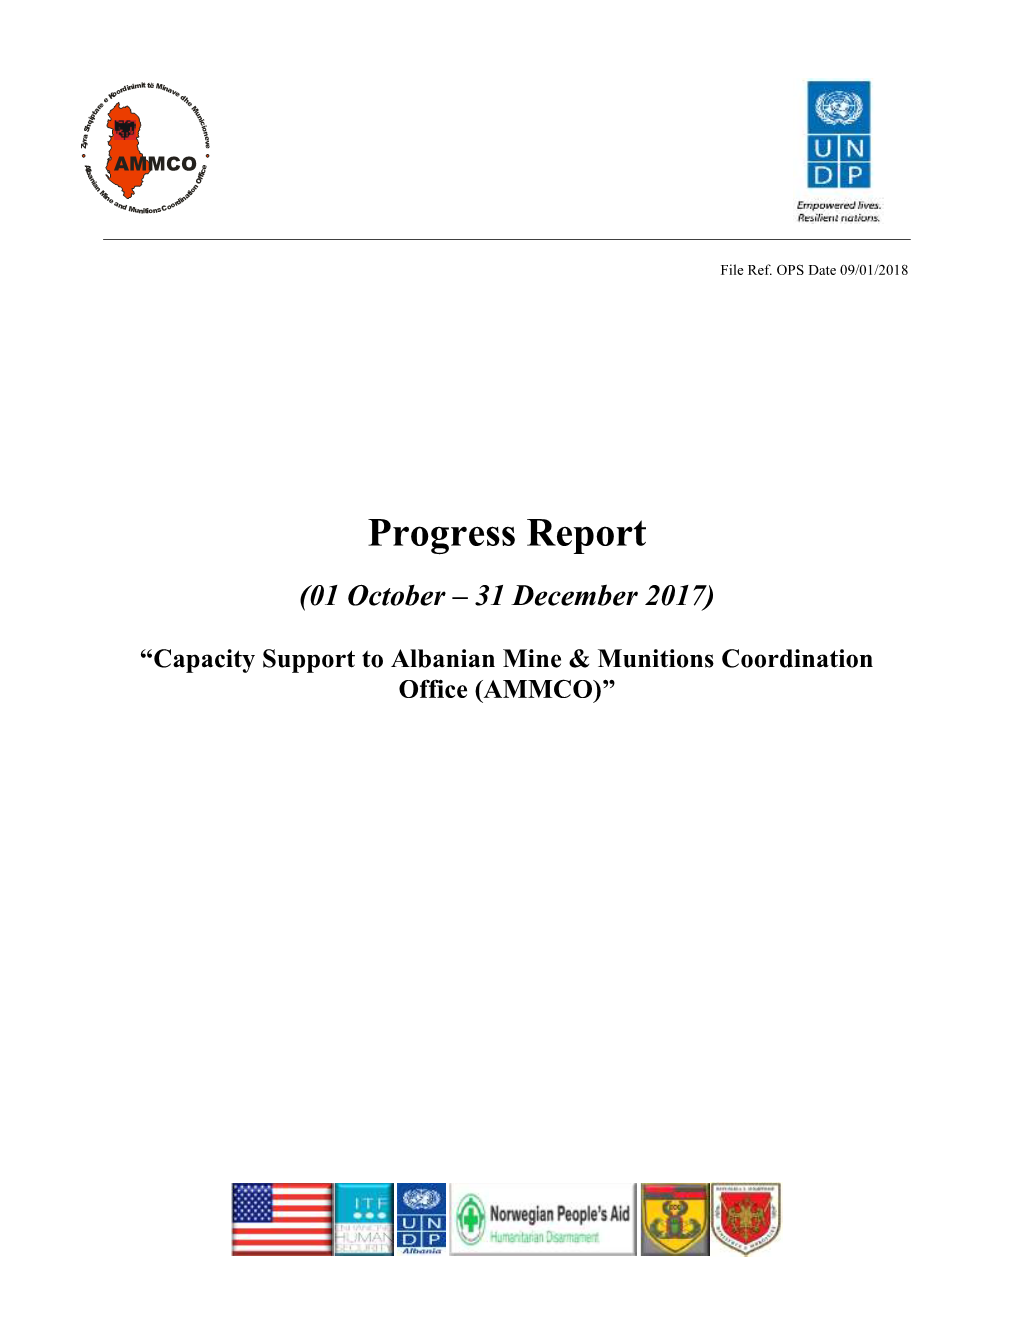 AMMCO Progress Report